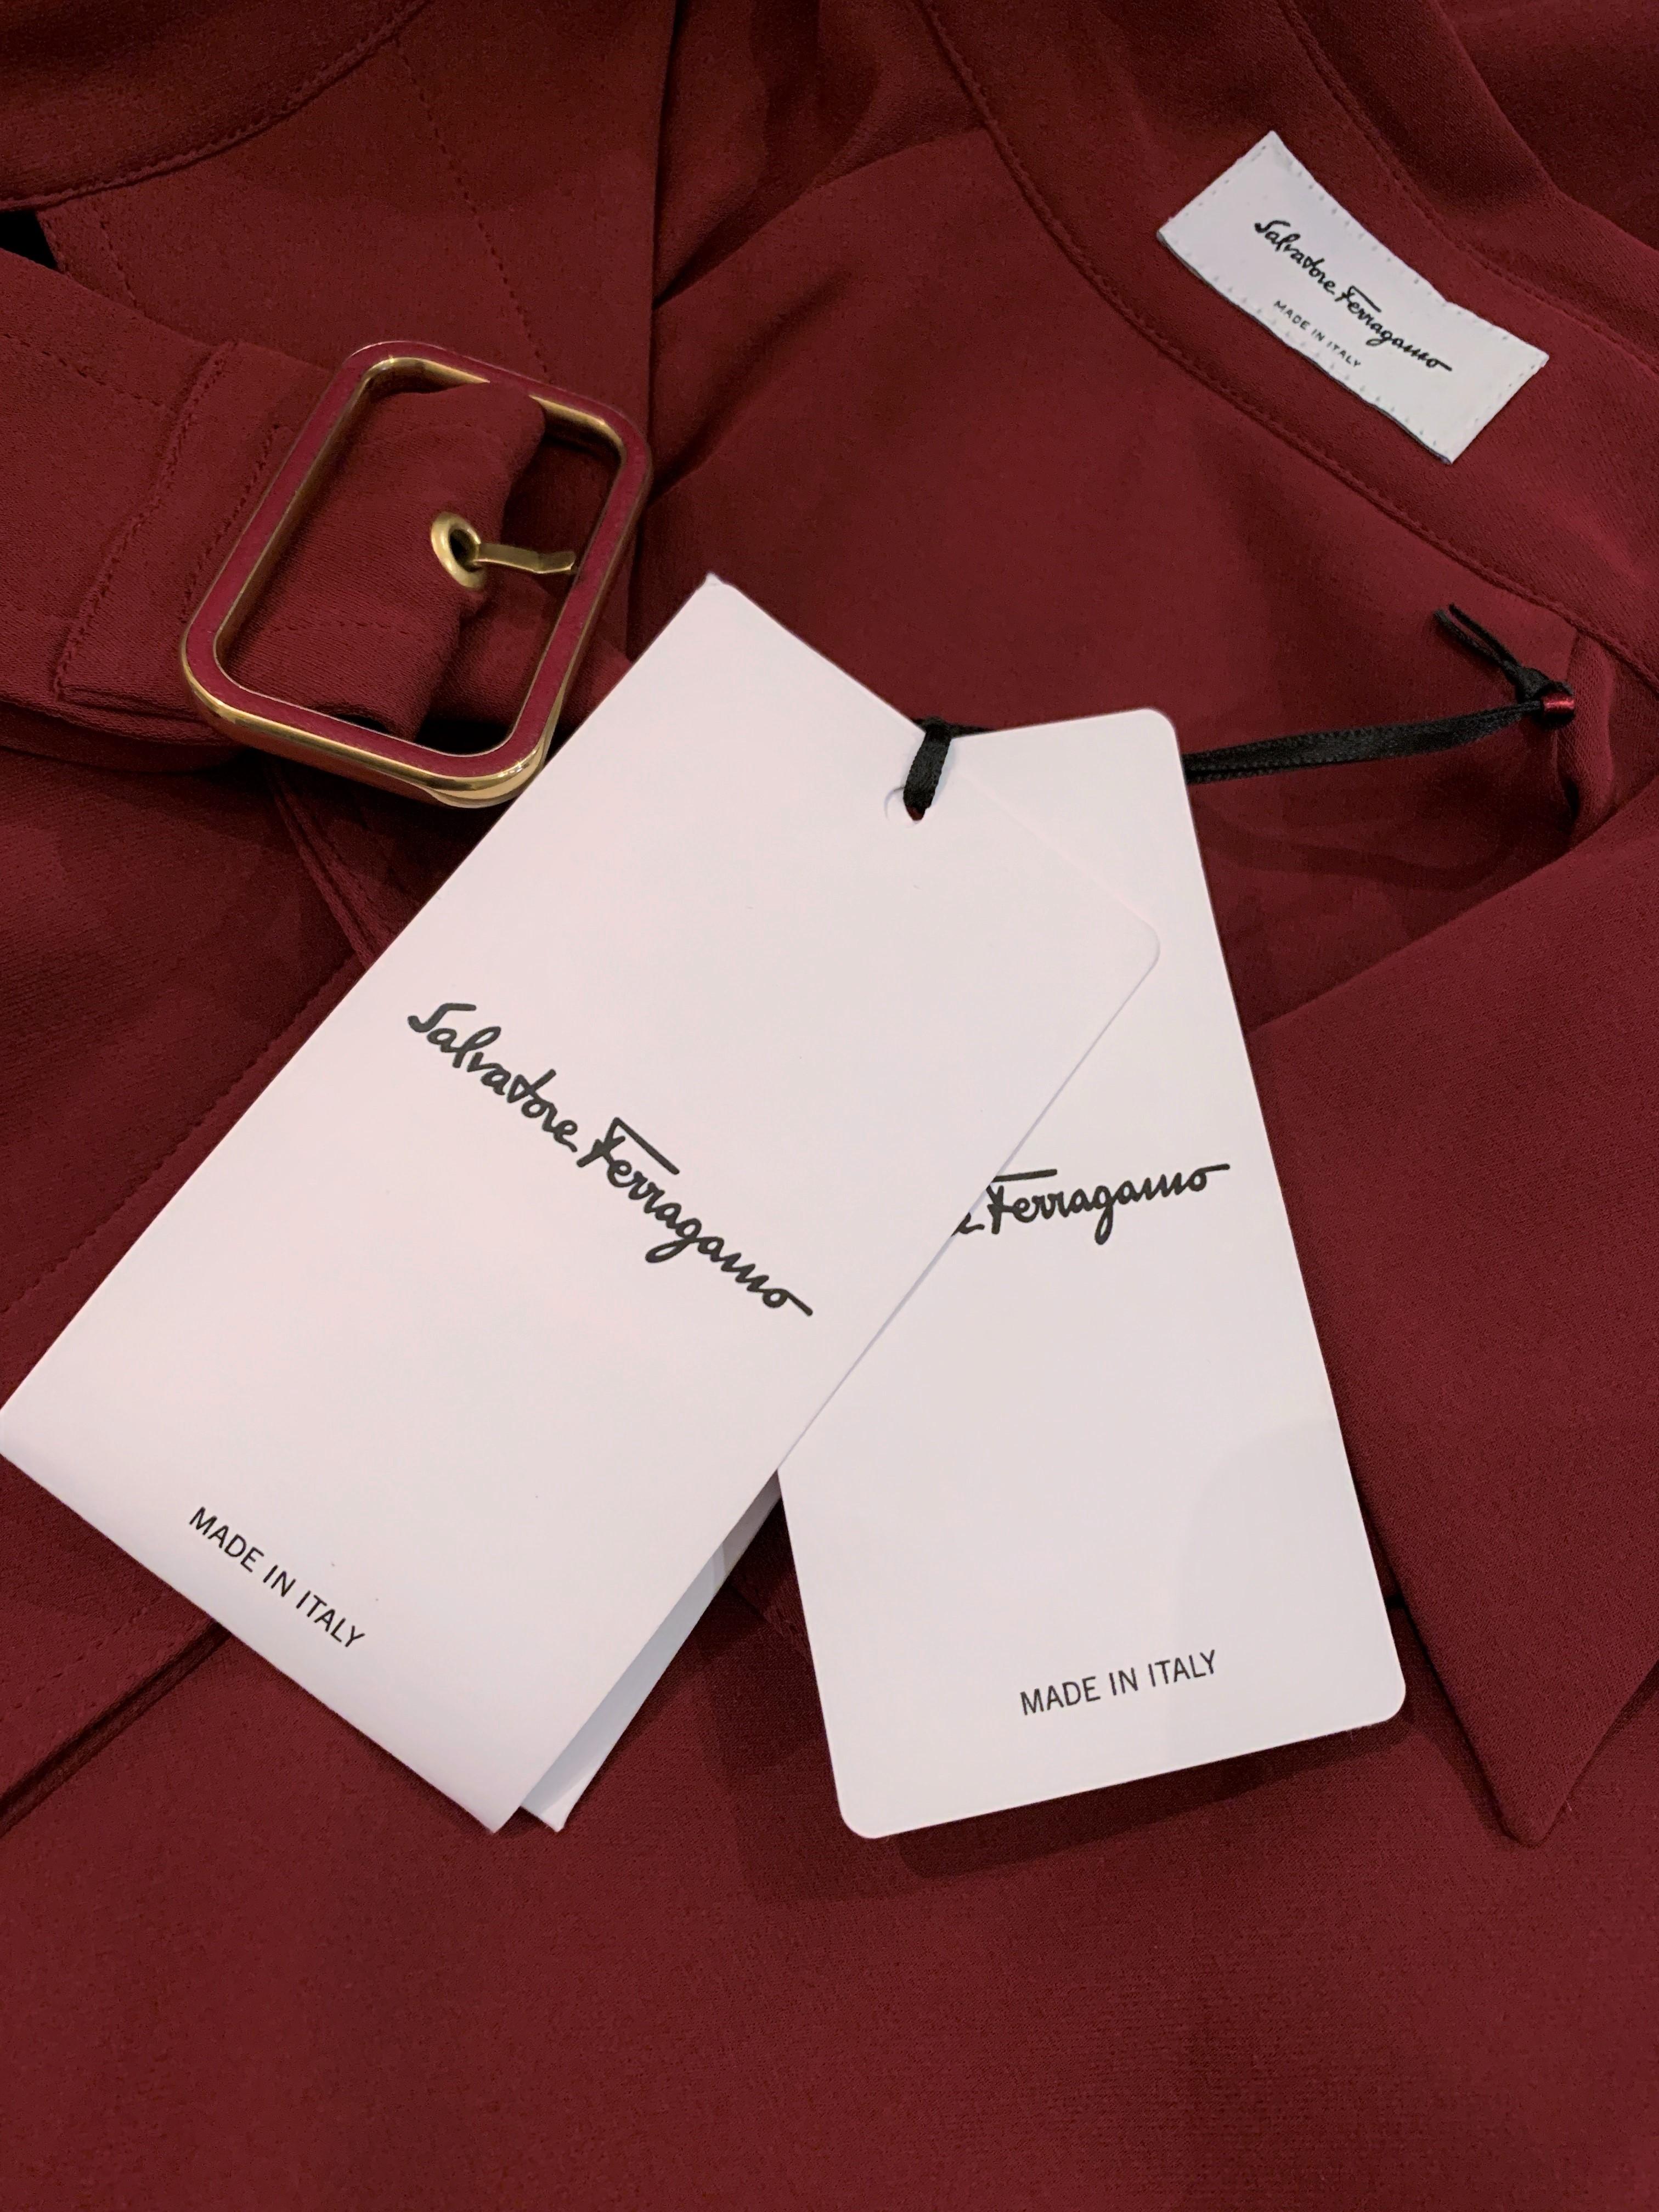 New Rare Salvatore Ferragamo Red Silk Dress F/W 2018  With Tags $3200 Sz 38 4